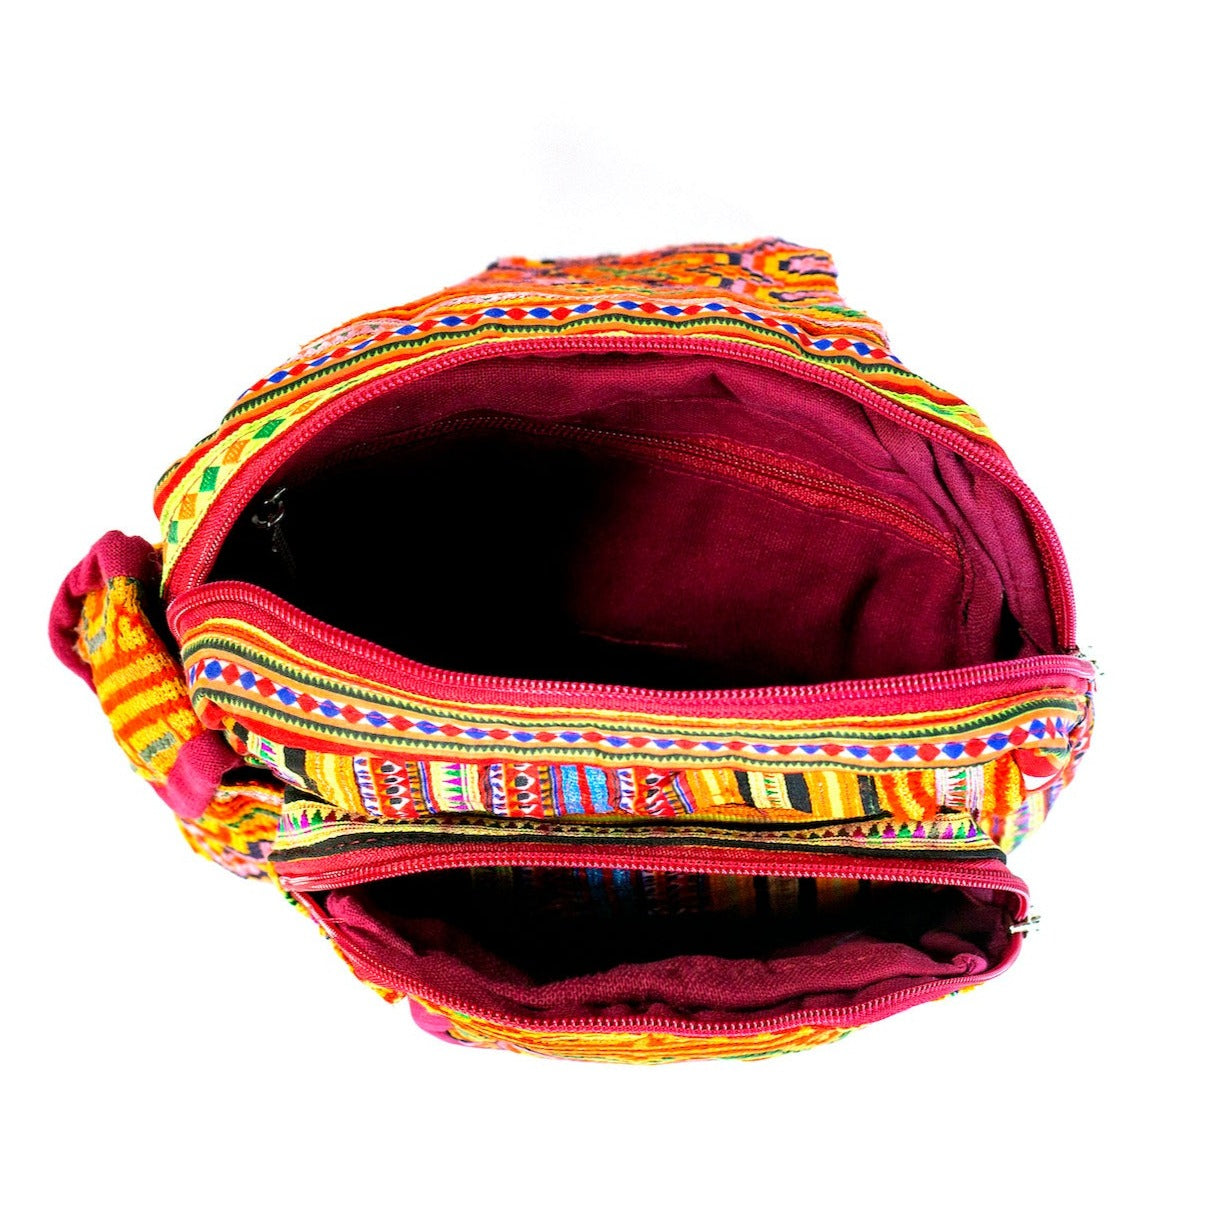 Boho-style linen, embroidery Sling bag, H'mong tribal pattern in ORANGE